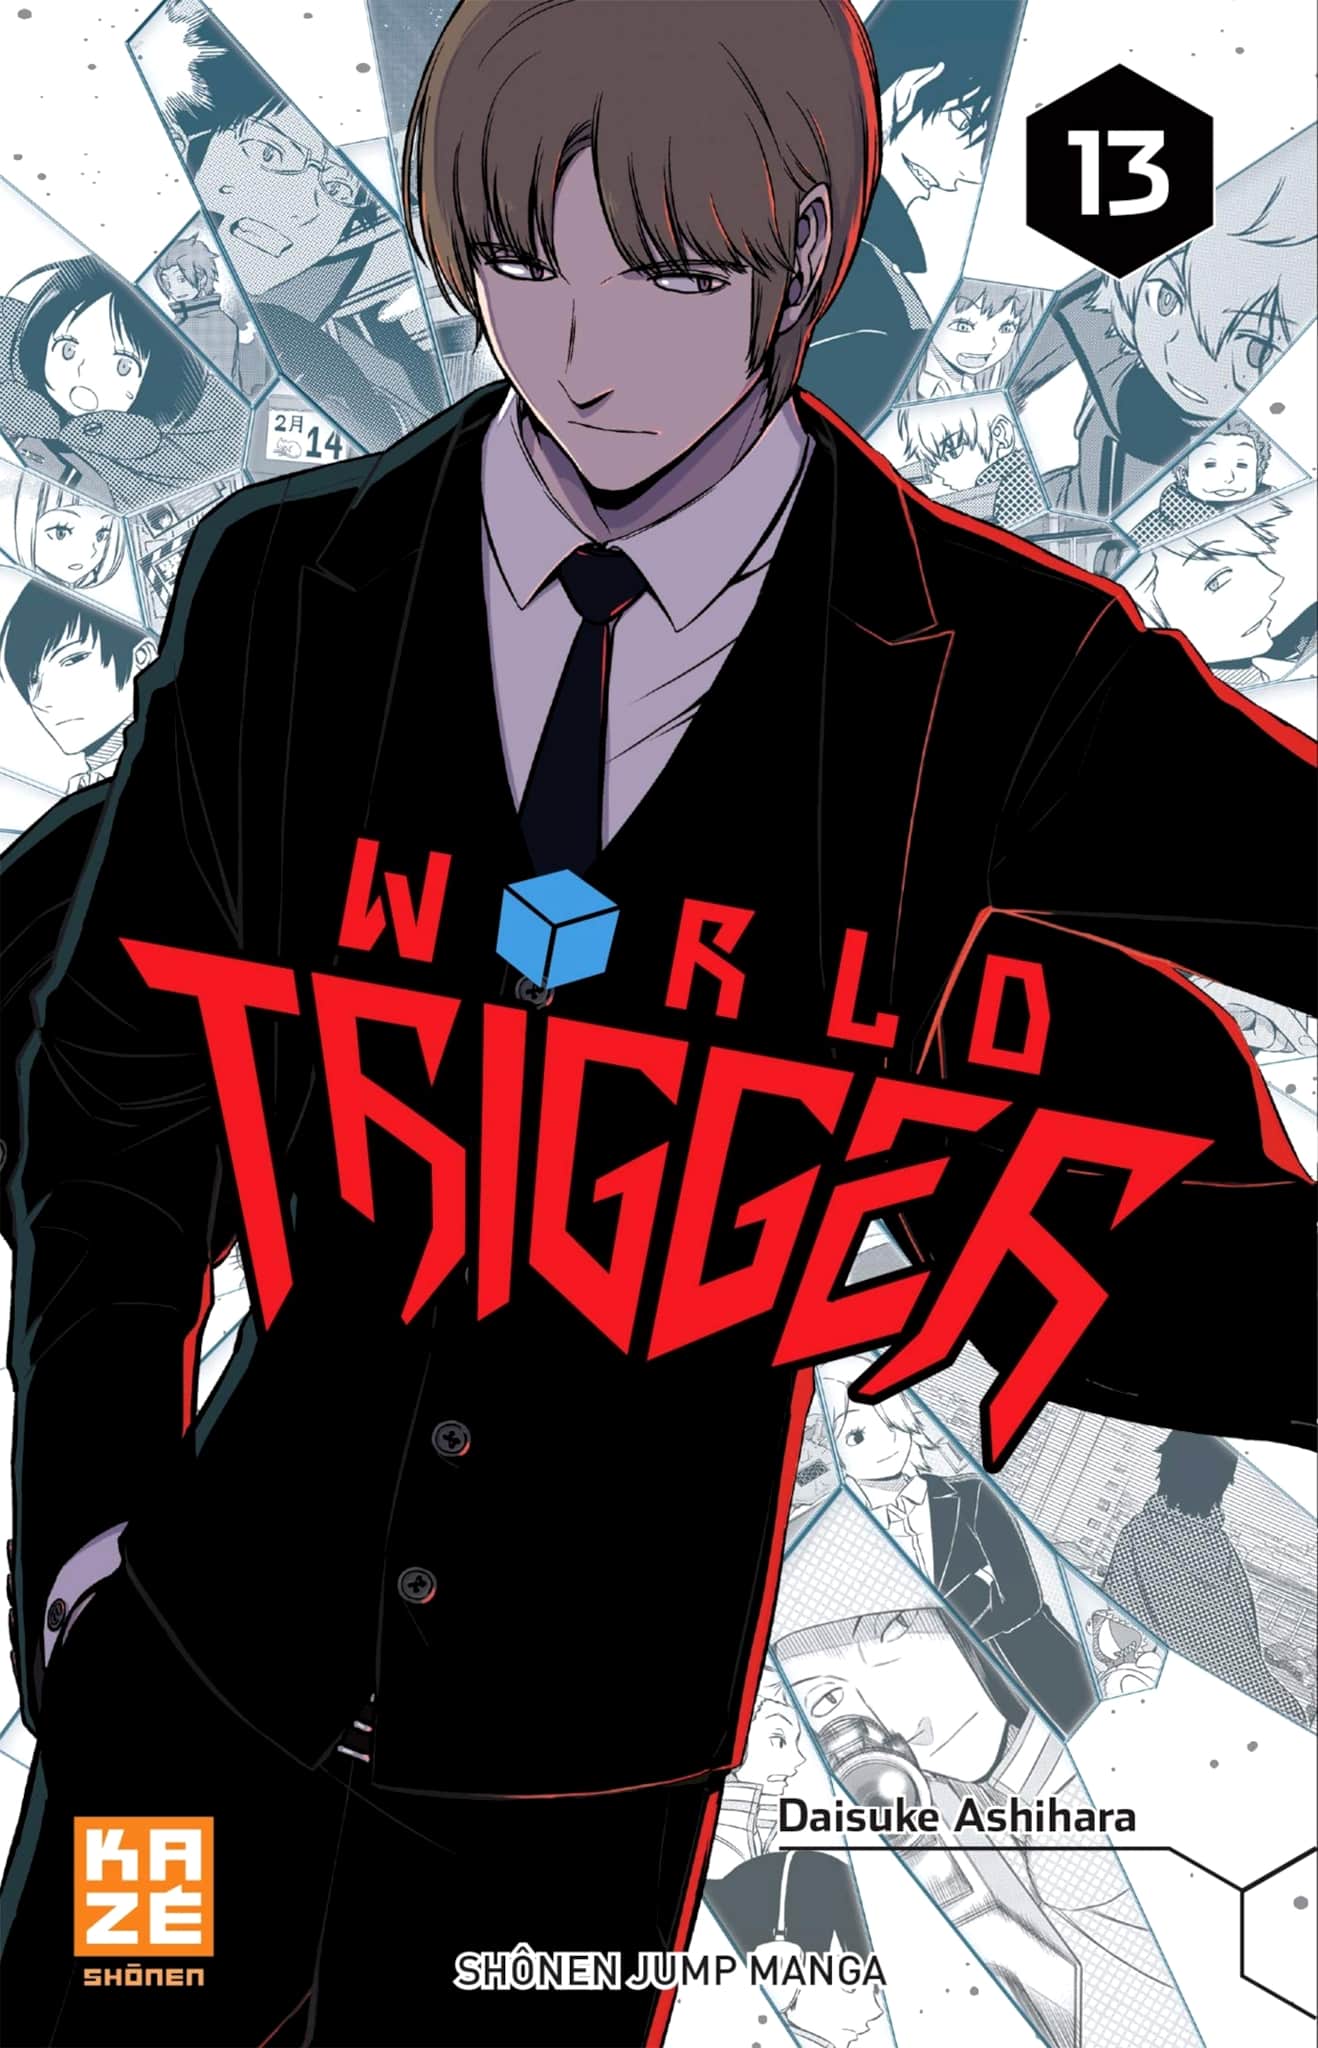 Tome 13 du manga World Trigger